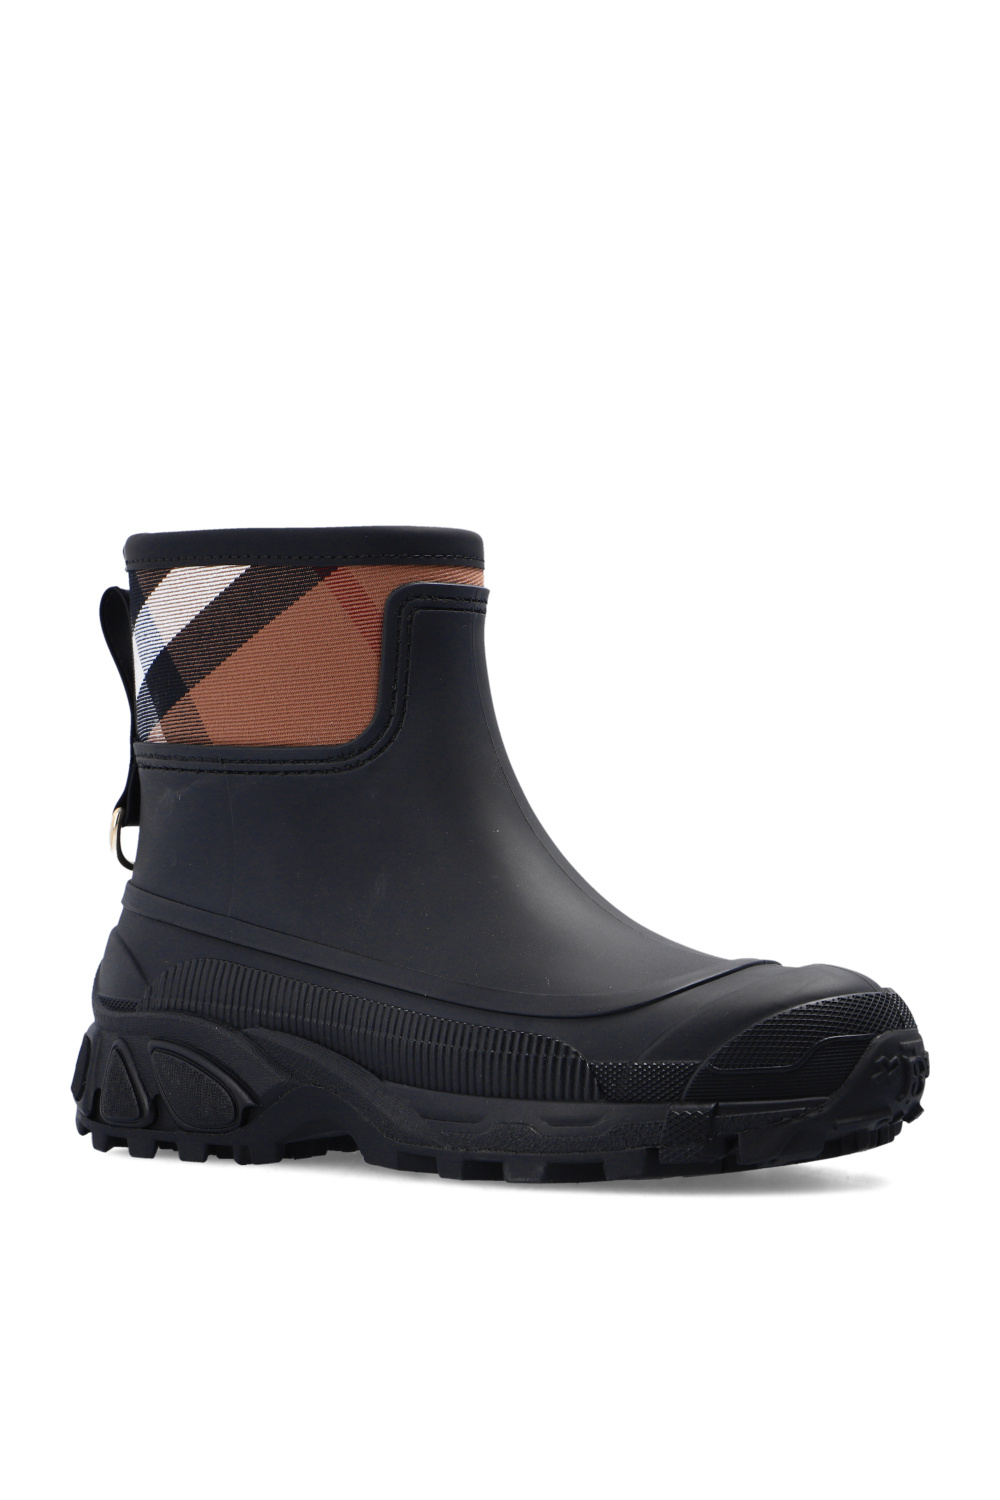 Burberry Checked rain boots